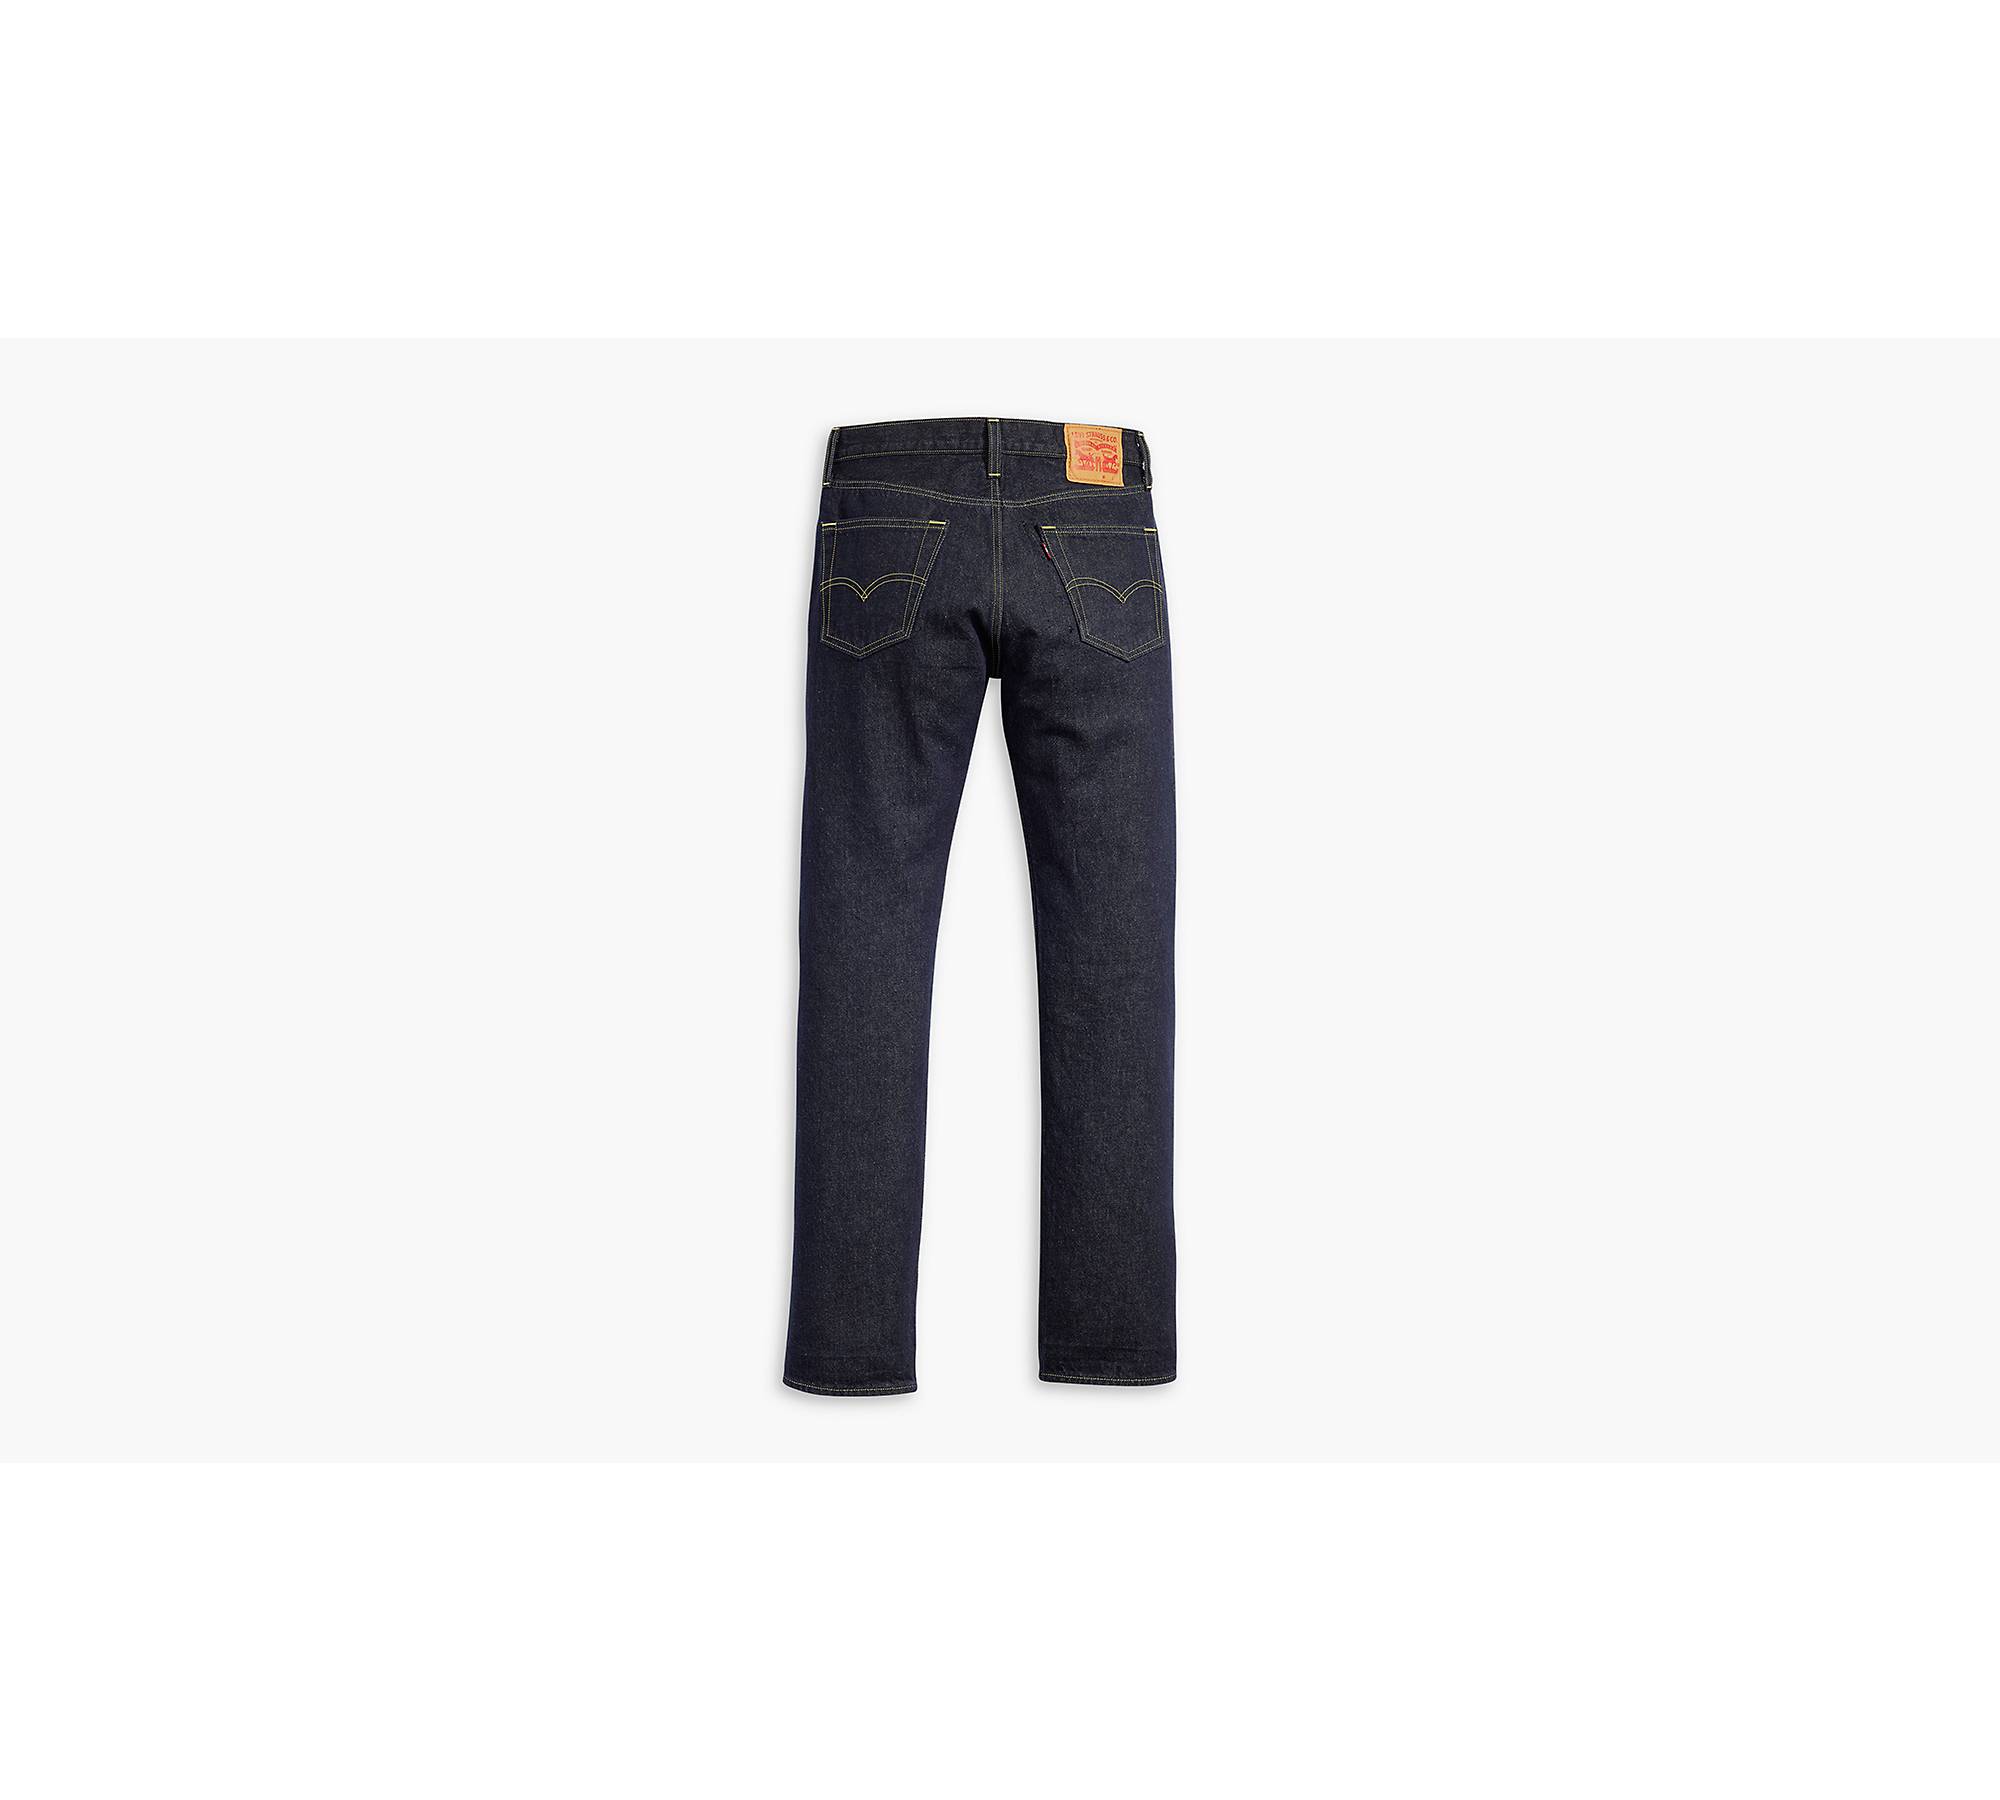 Levi's Men's 501 Original Straight Jeans - Black Denim 33x30 